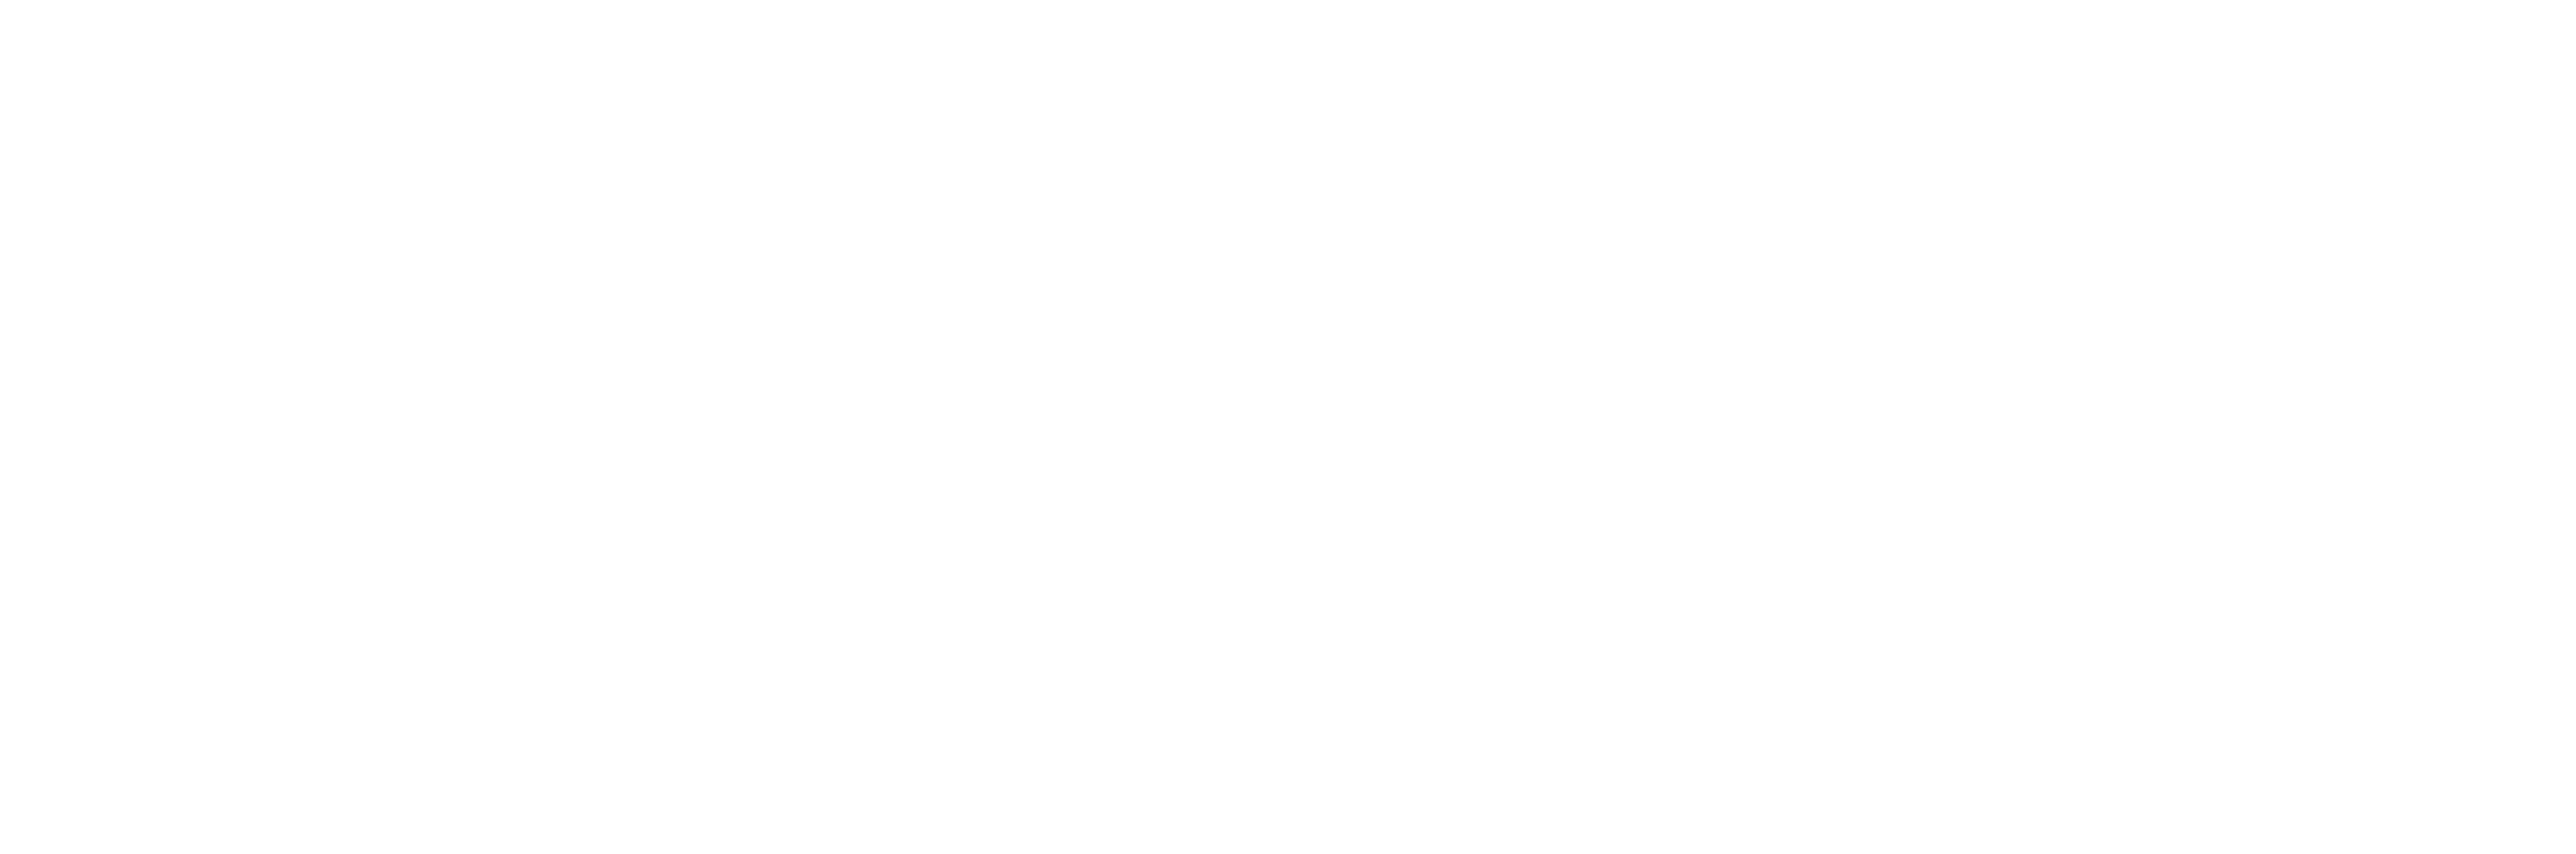 Twitch Logo Black And White